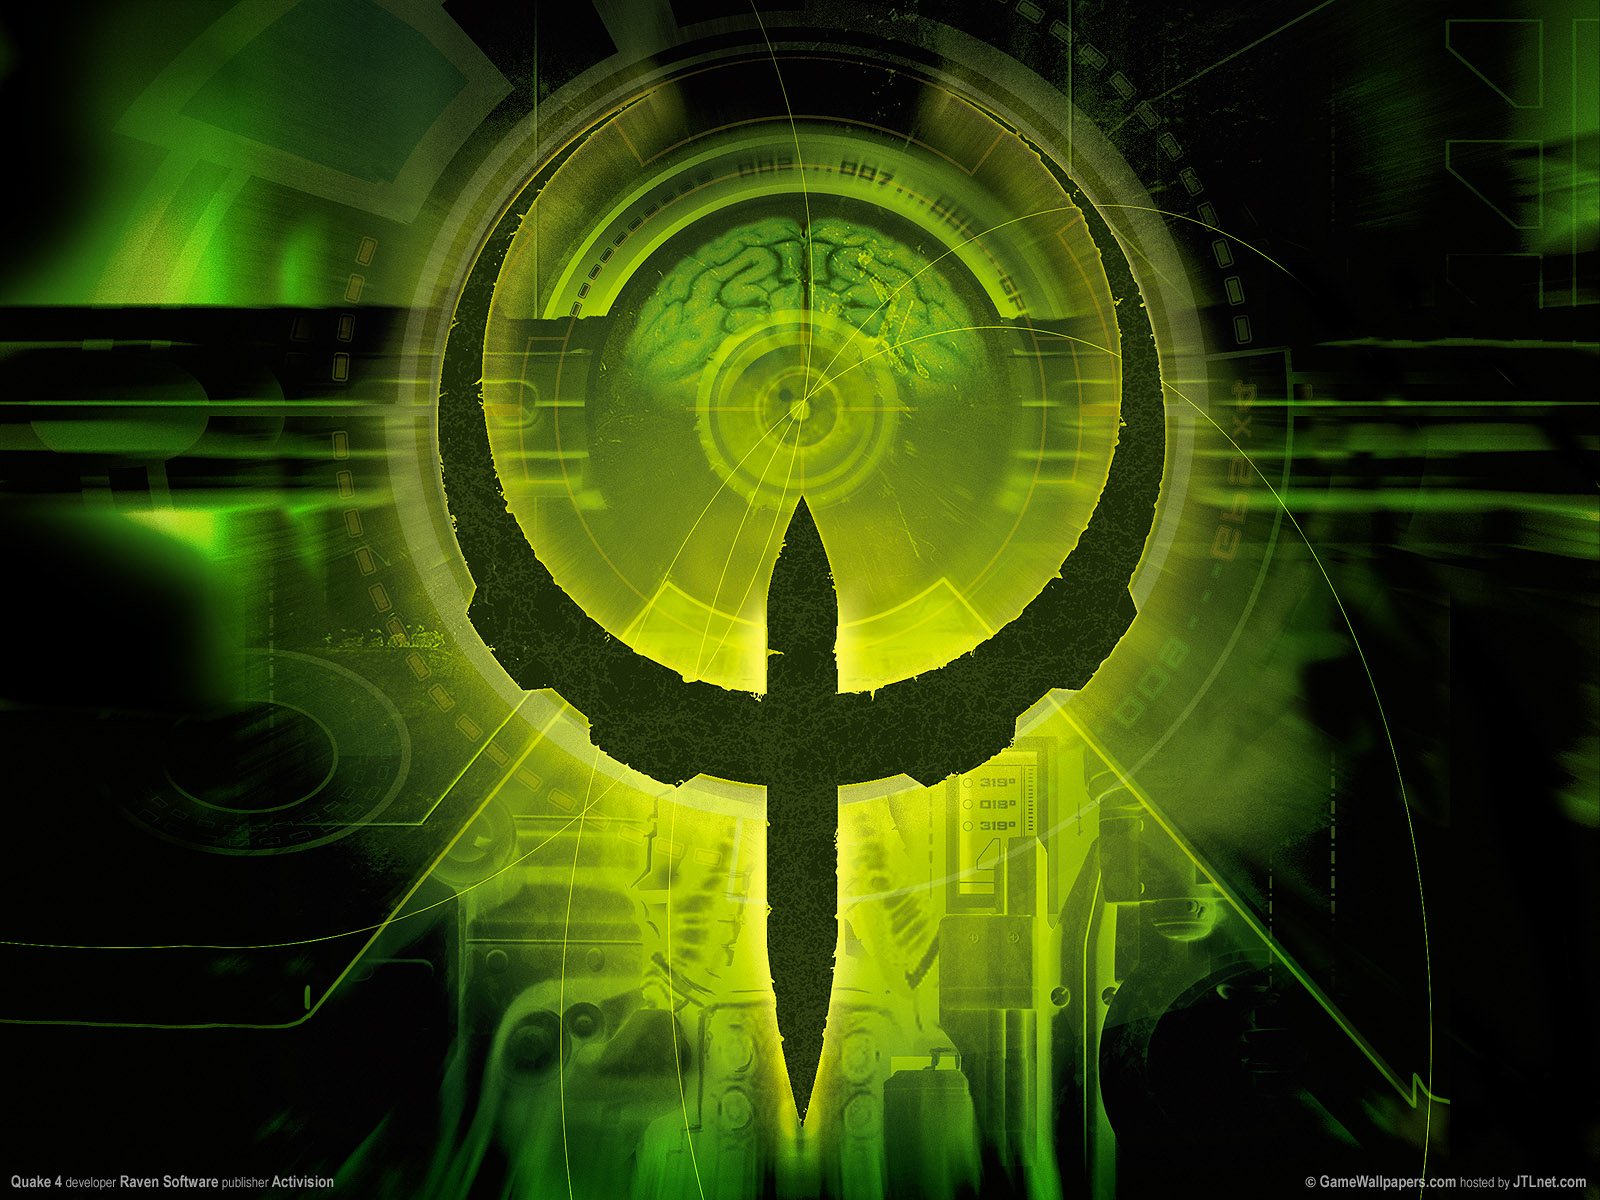 Download High quality Quake 4 wallpaper / Games / 1600x1200